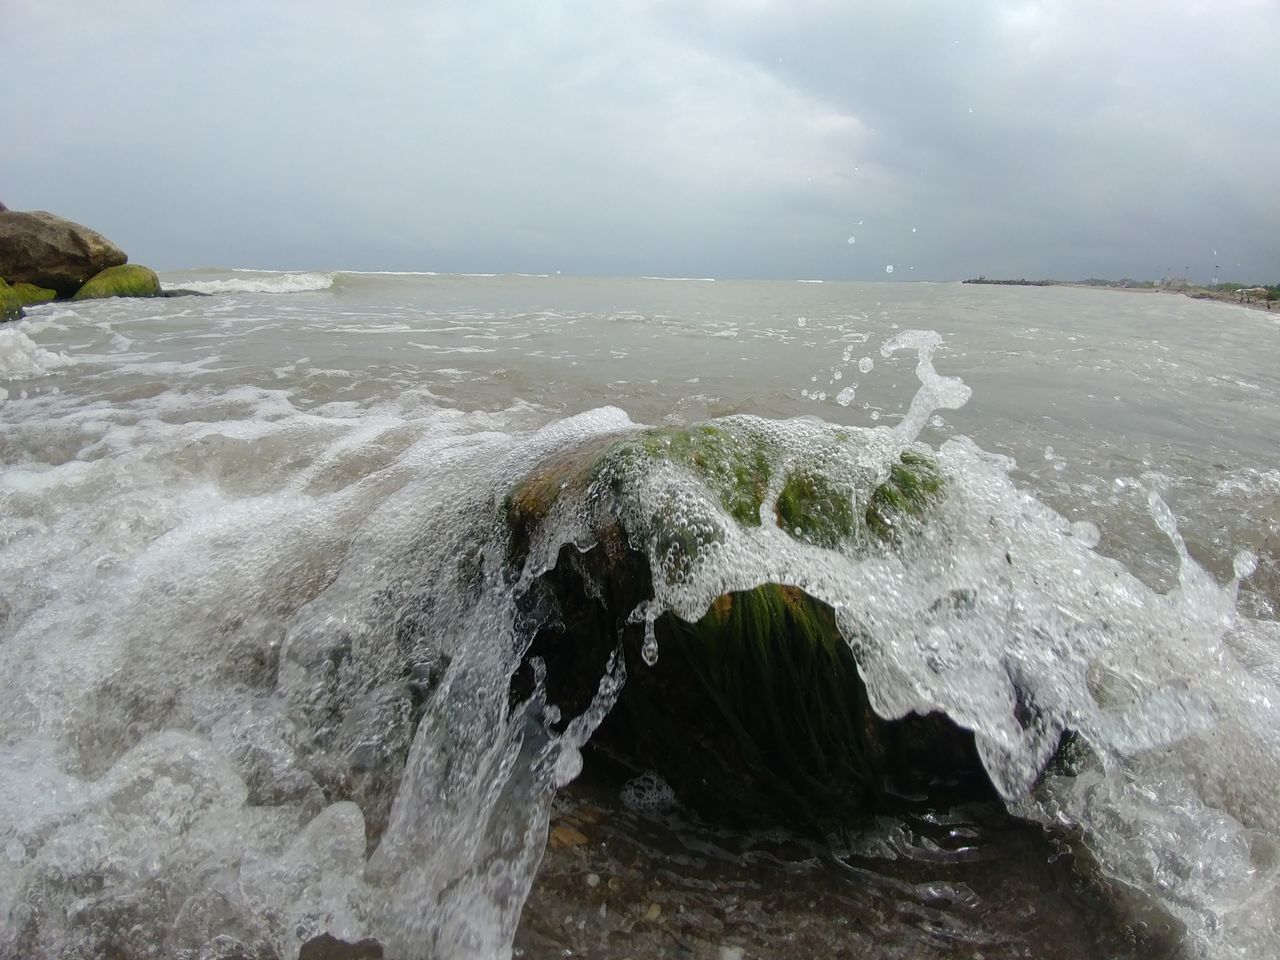 SEA WAVES SPLASHING ON ROCKS